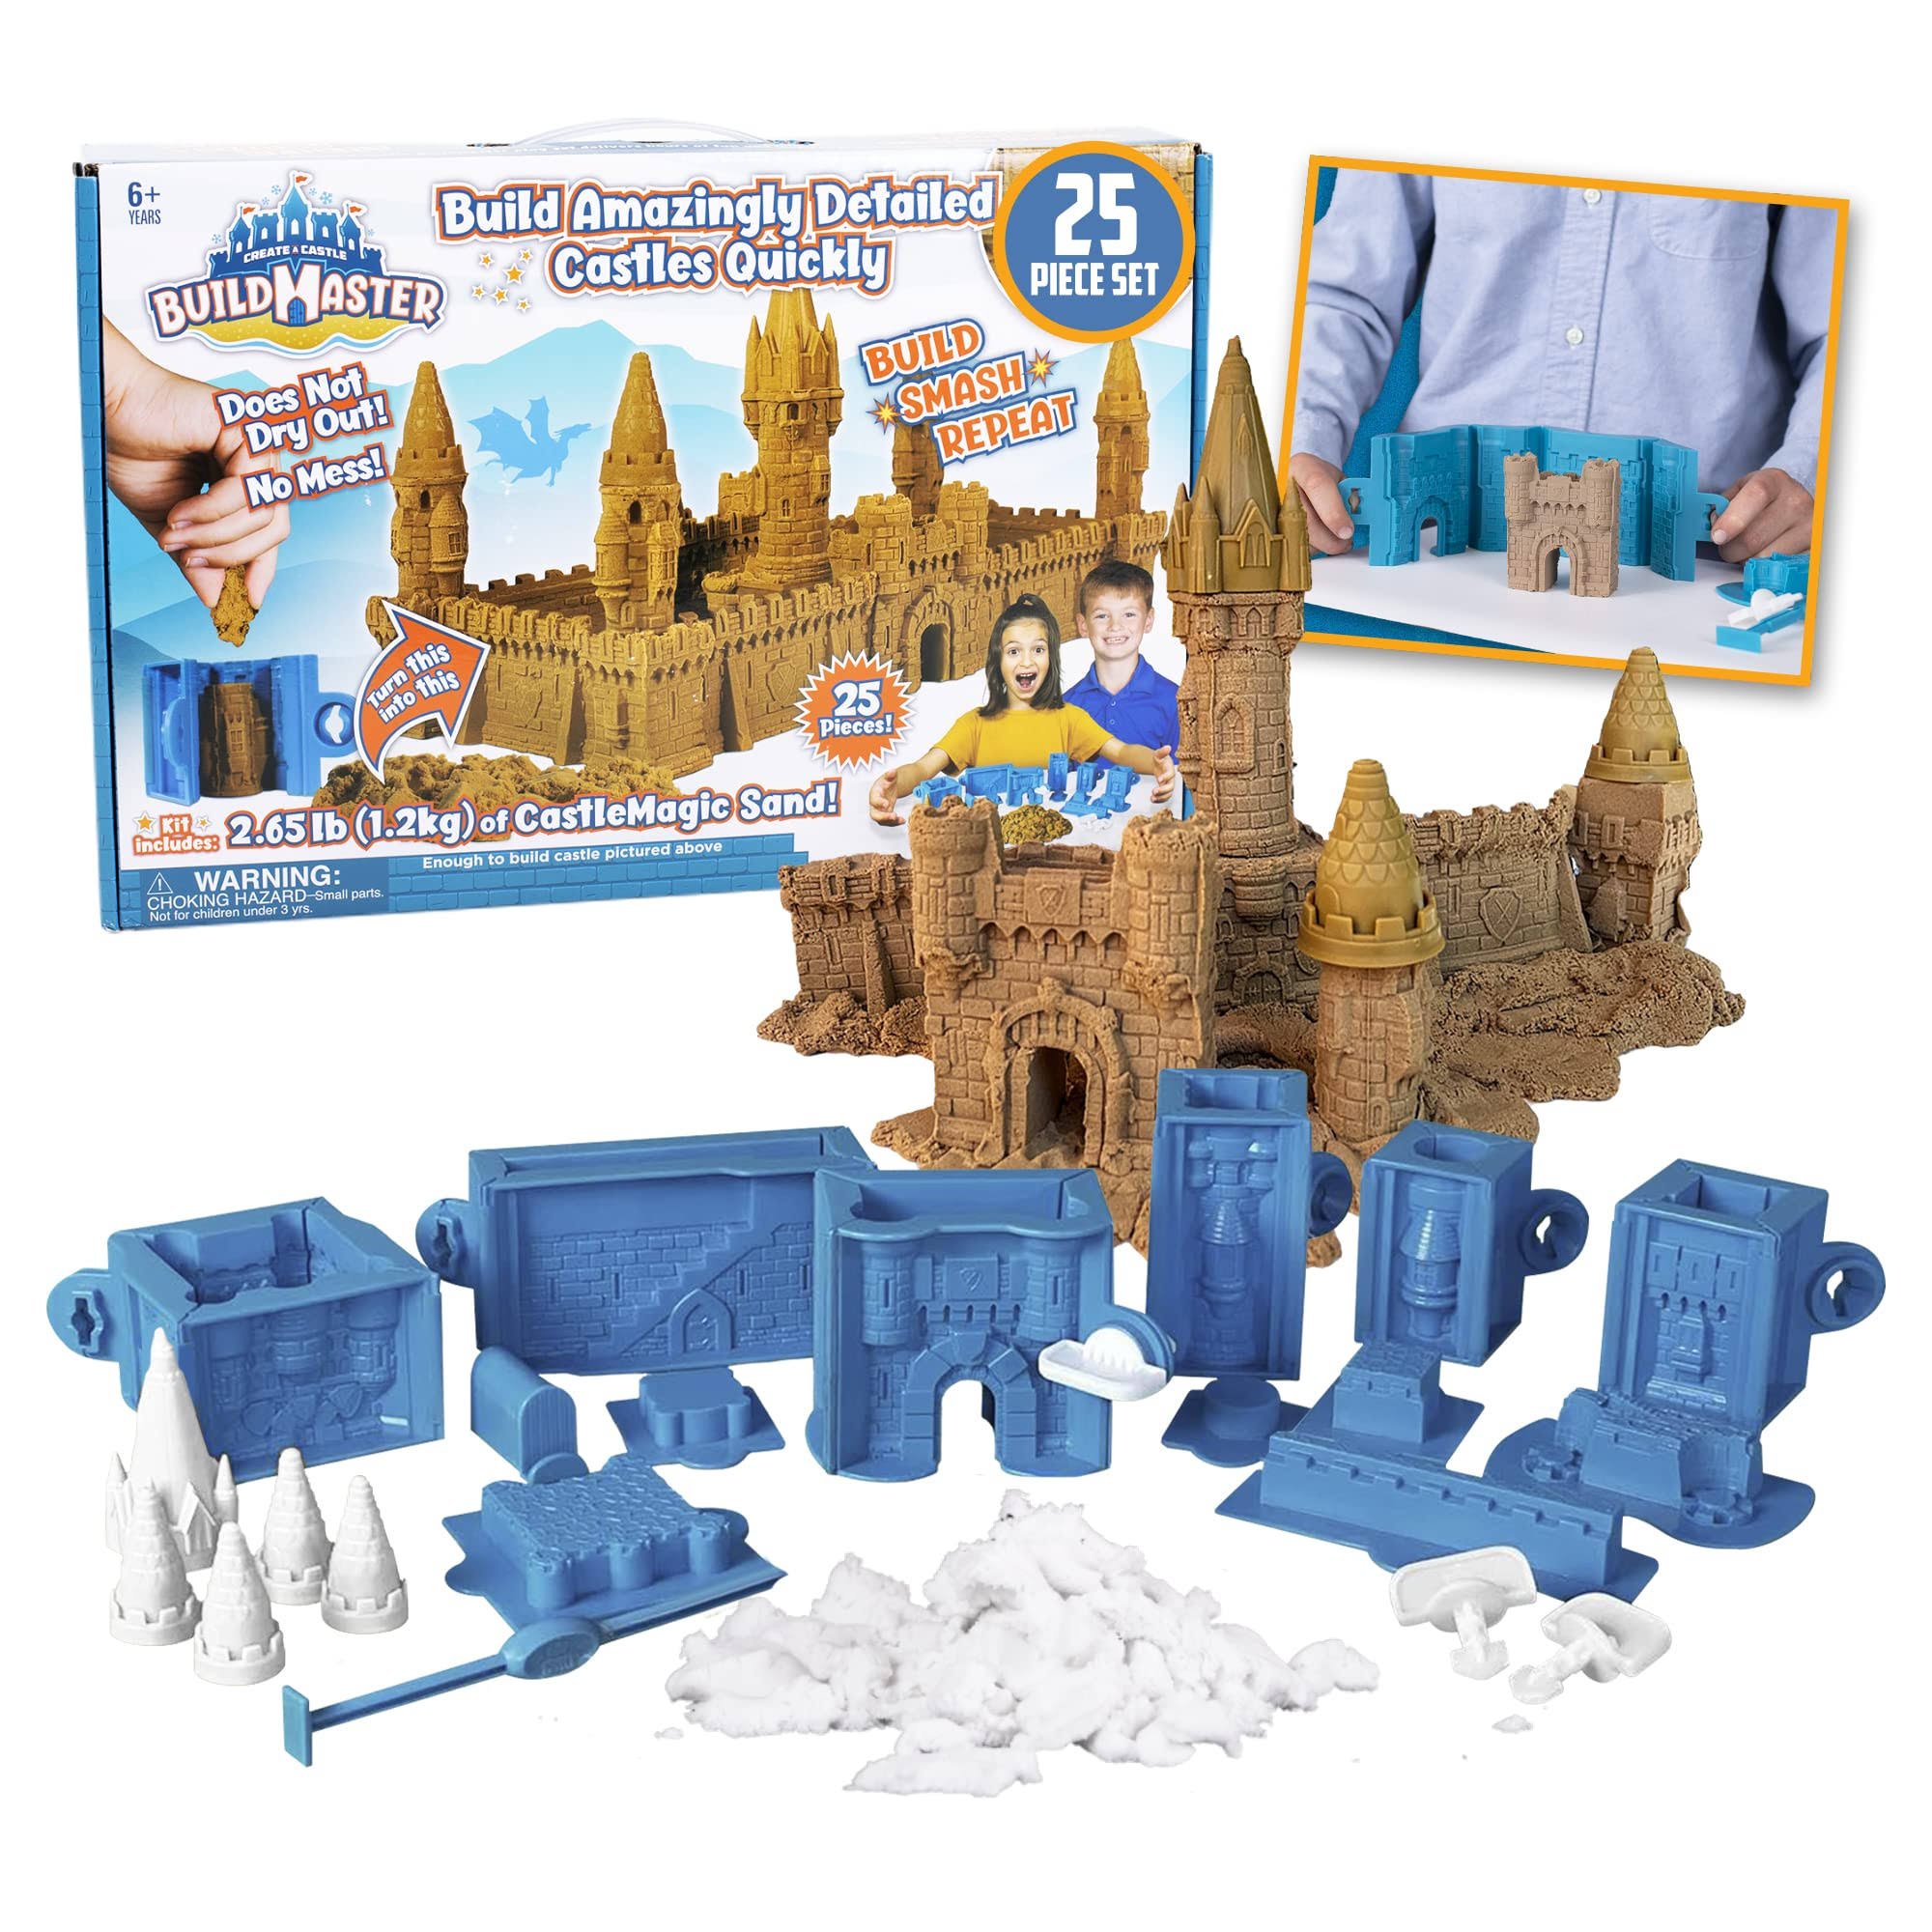 Create A Castle Indoor Sandcastle Building Kit As Seen On Shark Tank, BuildMaster Reusable Castle Magic Sand Toy Set For Kids, 25 Pieces, 2.65 Lbs